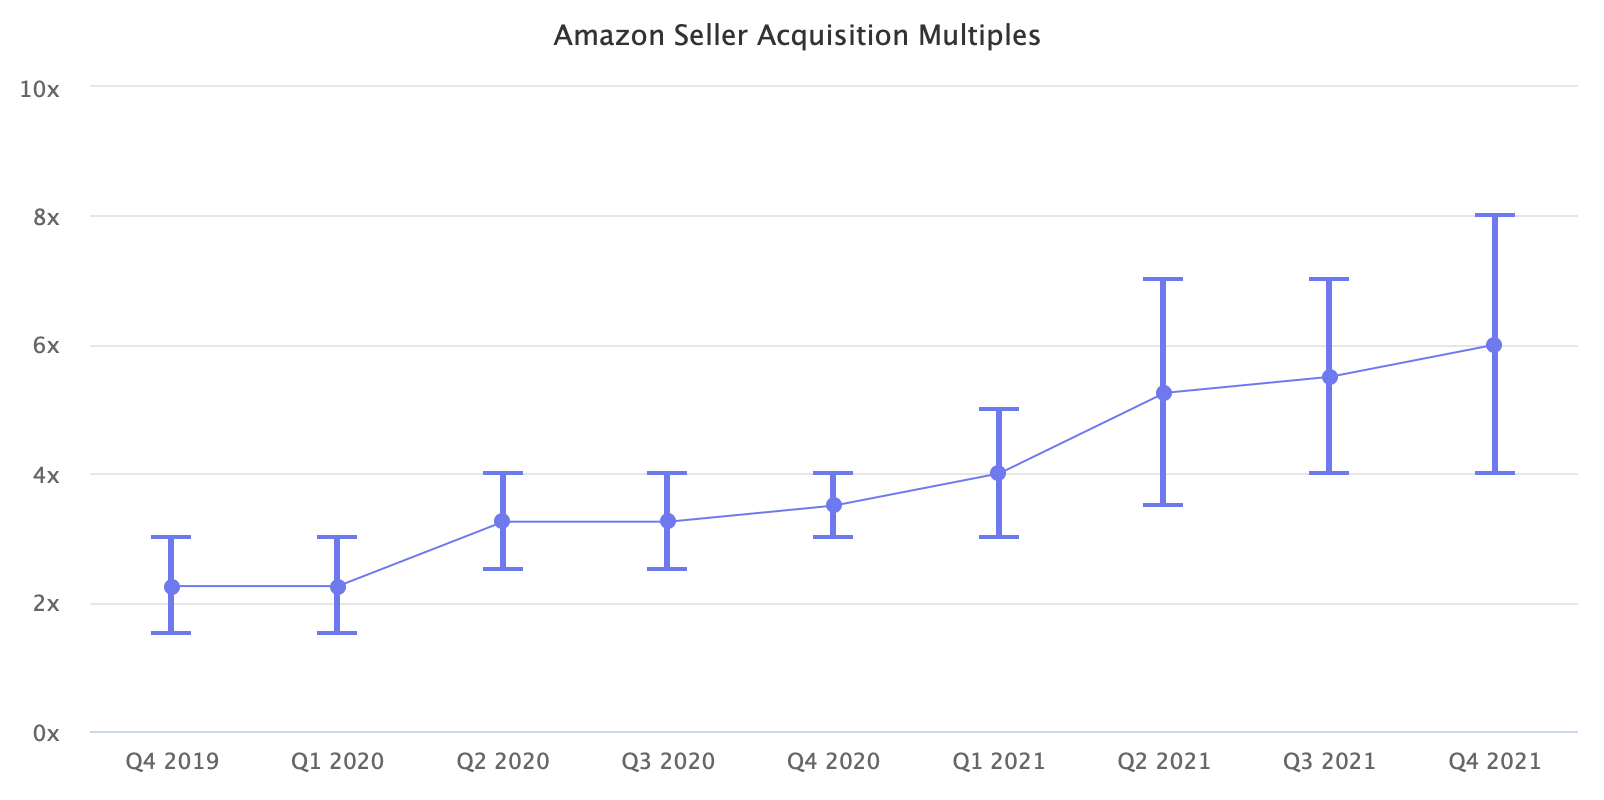 Amazon Seller Acquisition Multiples